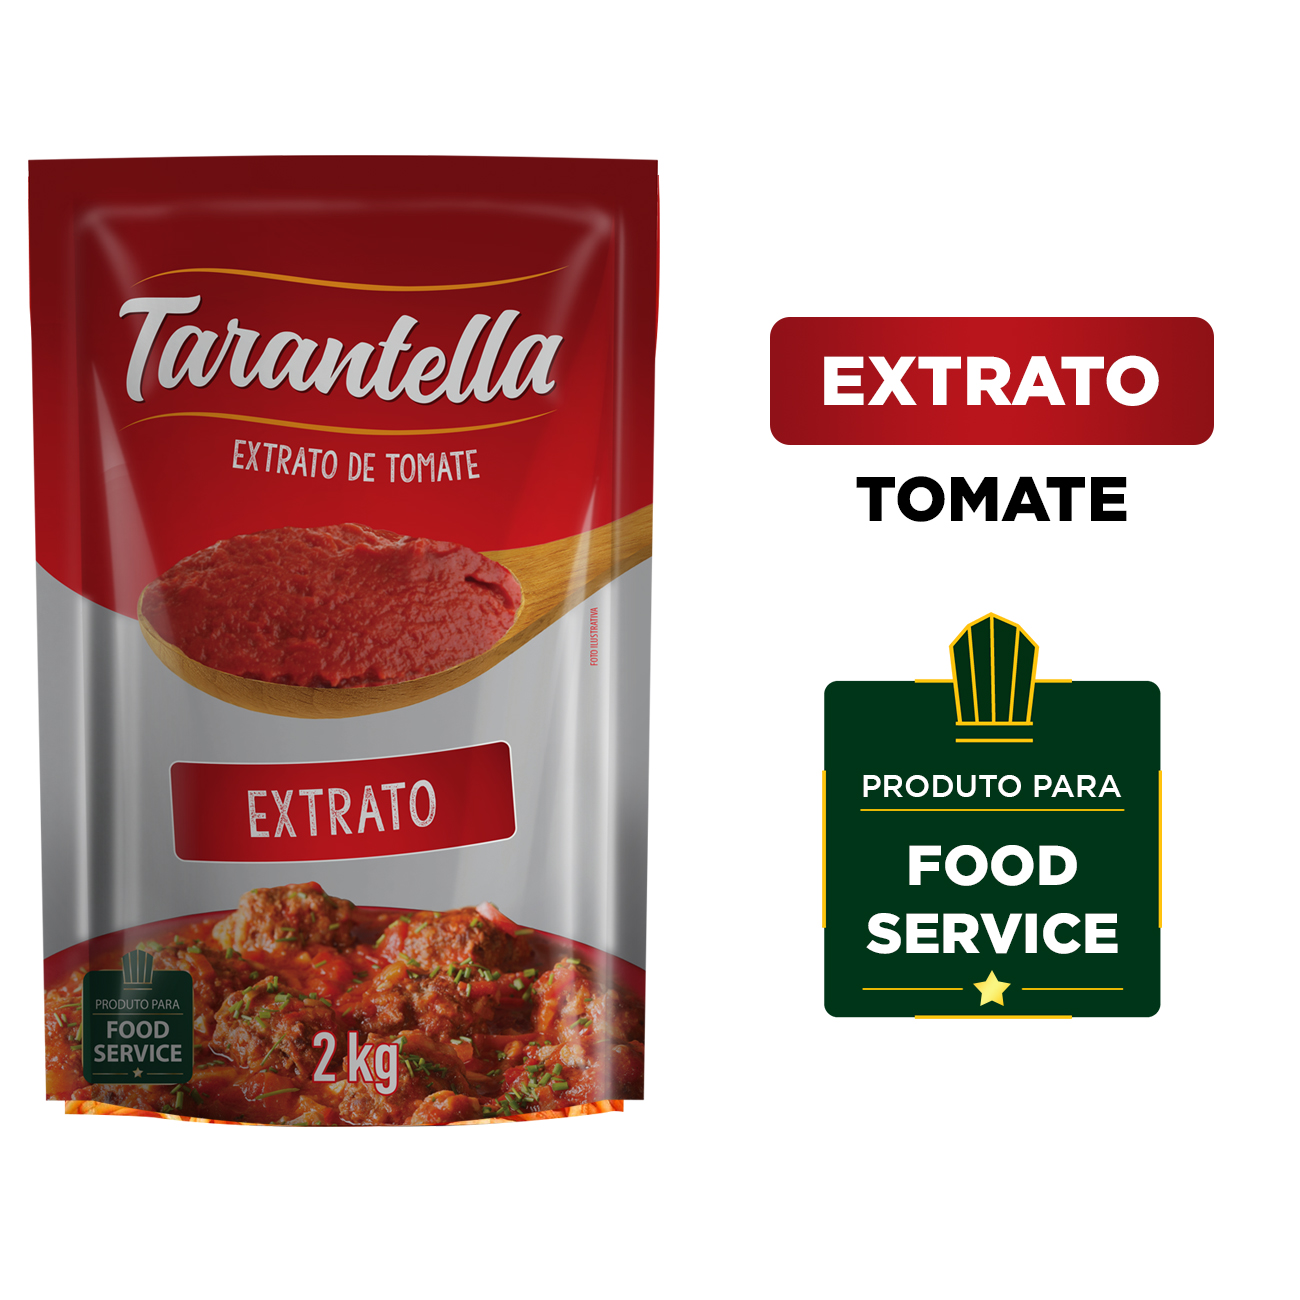 Extrato de Tomate Tarantella 2kg